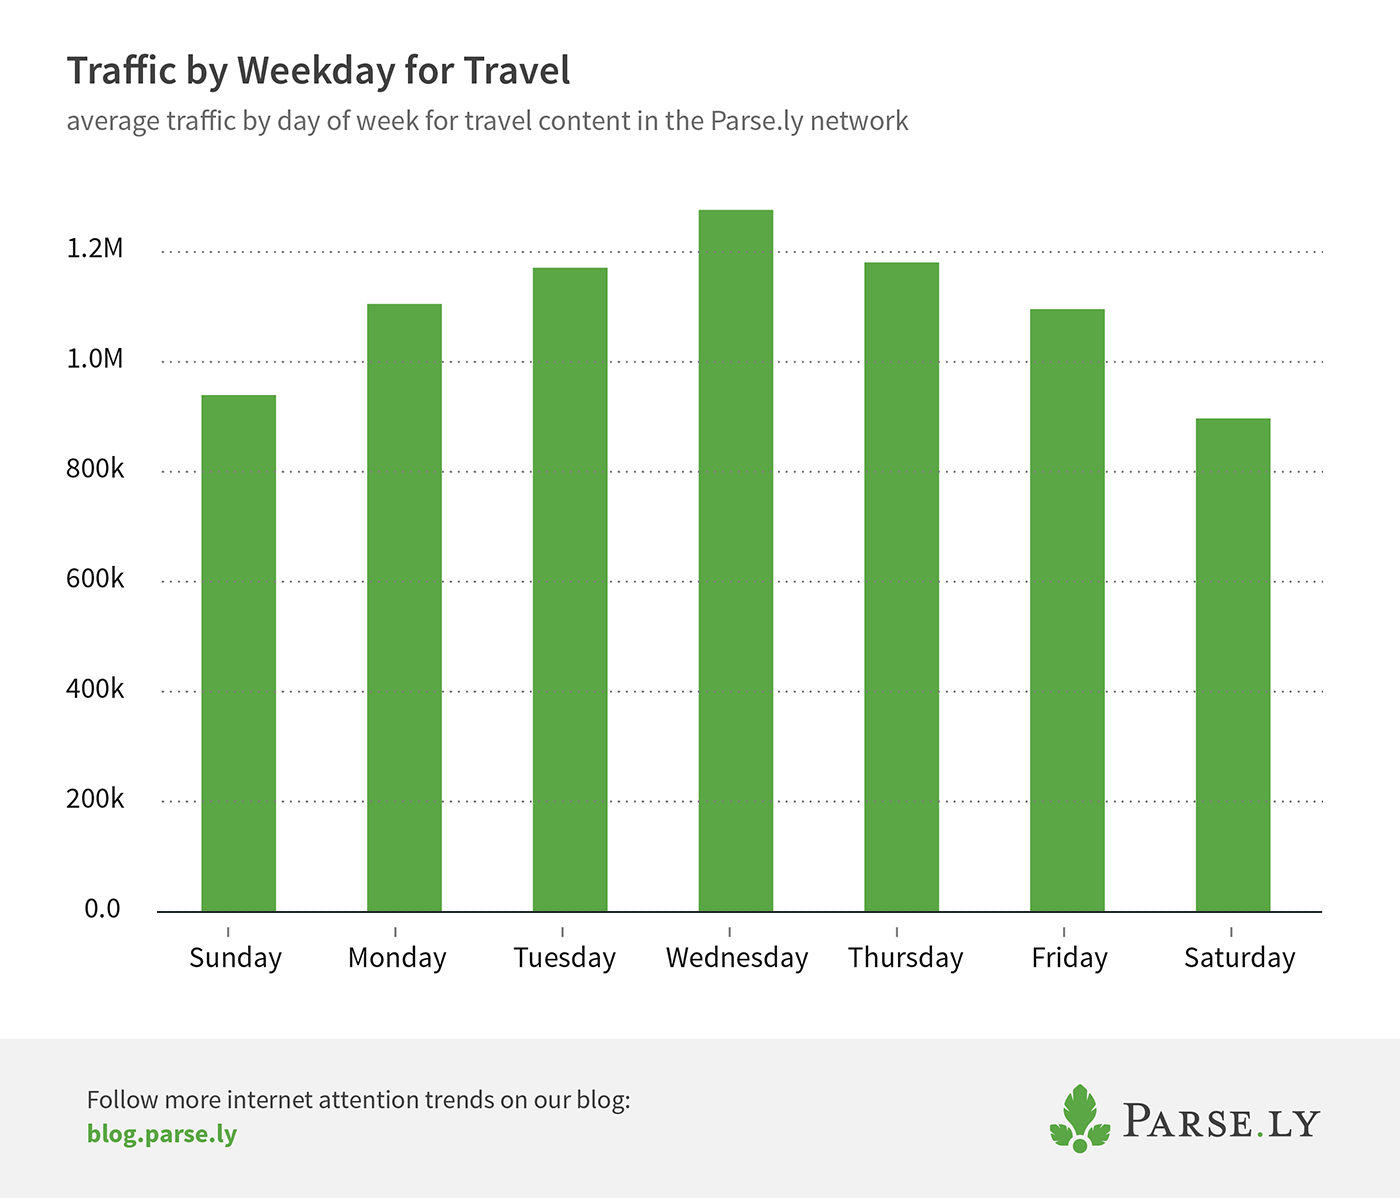 weekday traffic to travel